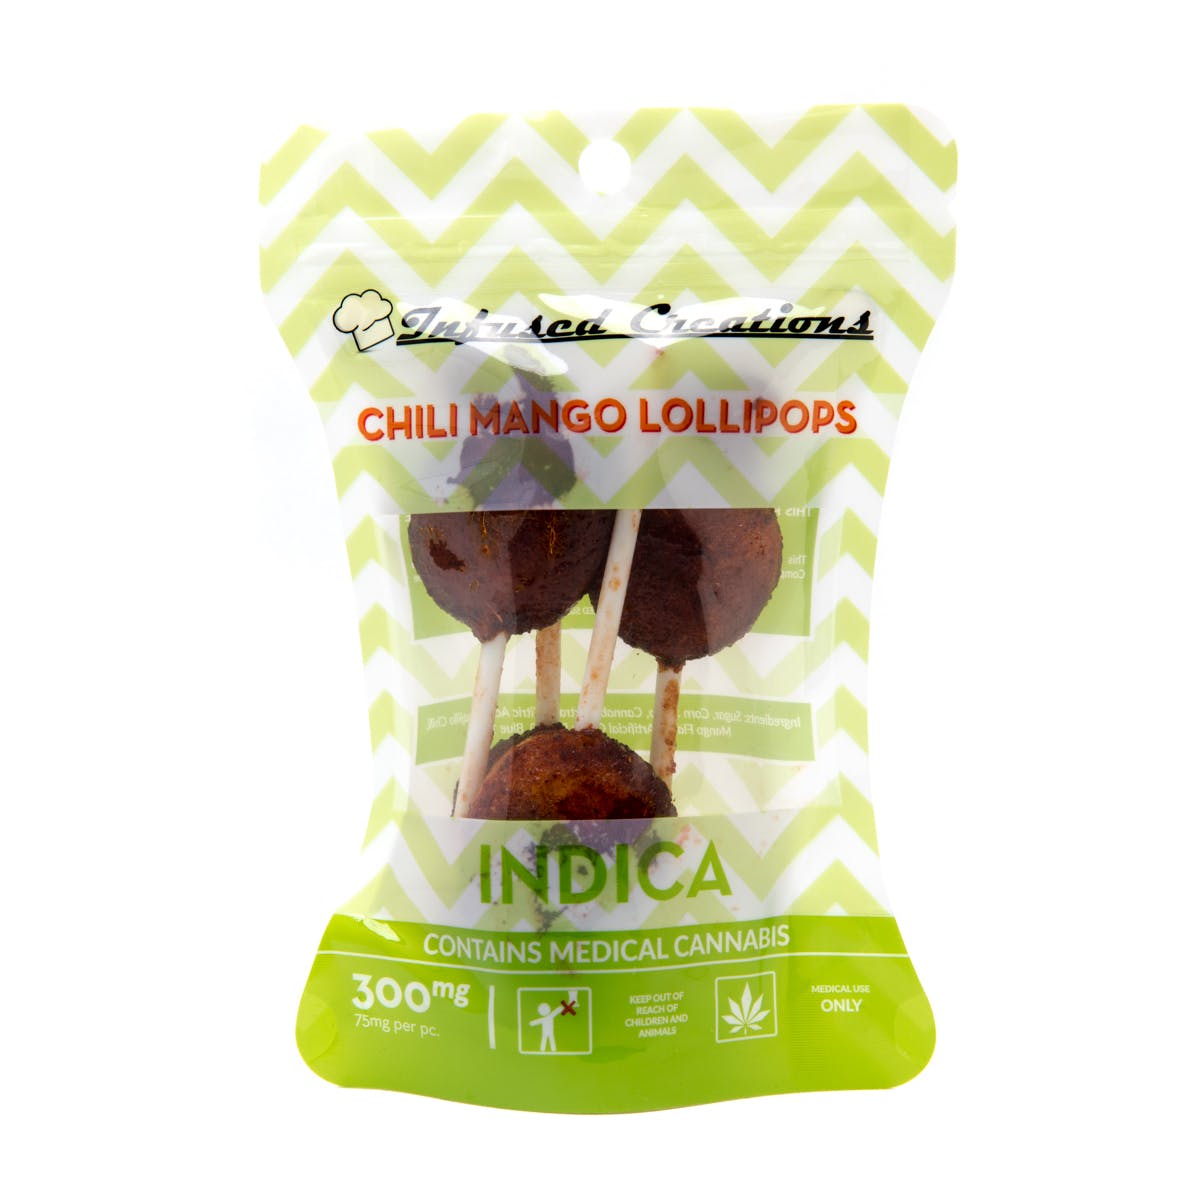 Chili Mango Lollipops Indica, 300mg